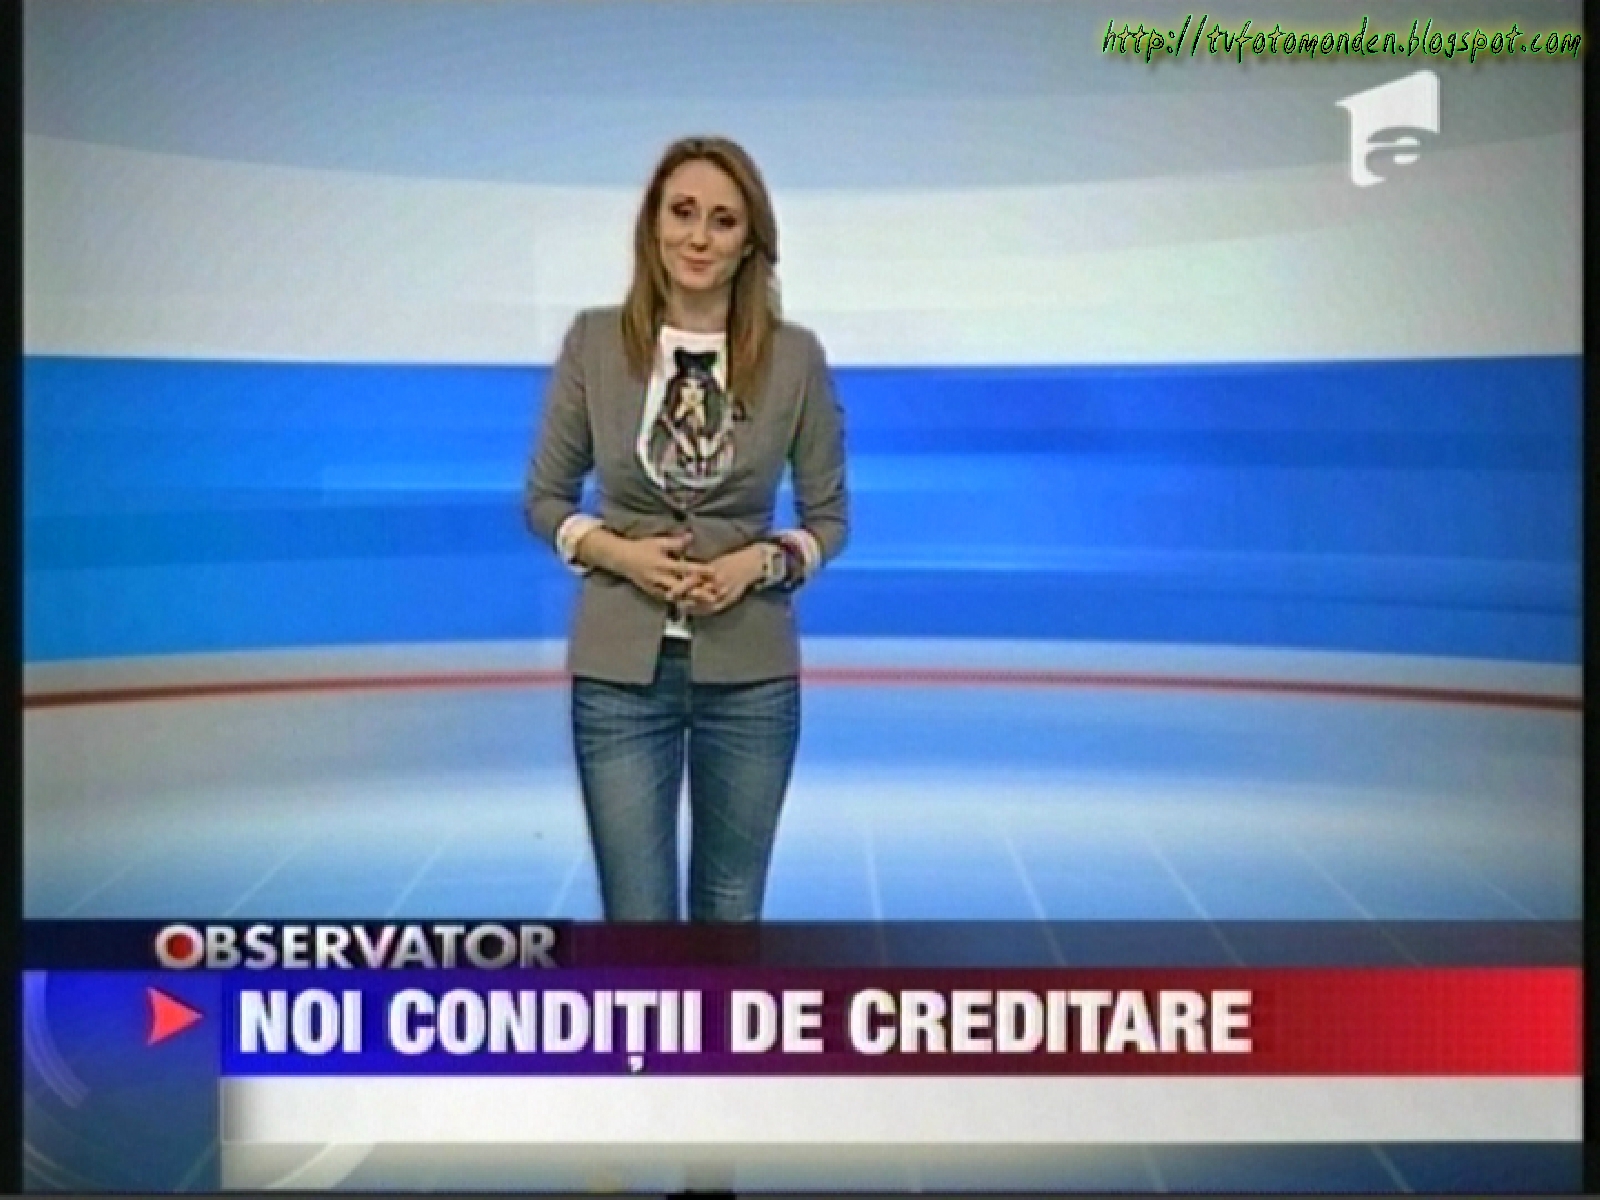 tv foto monden: Catalina Porumbel reporter la OBSERVATOR Antena 1